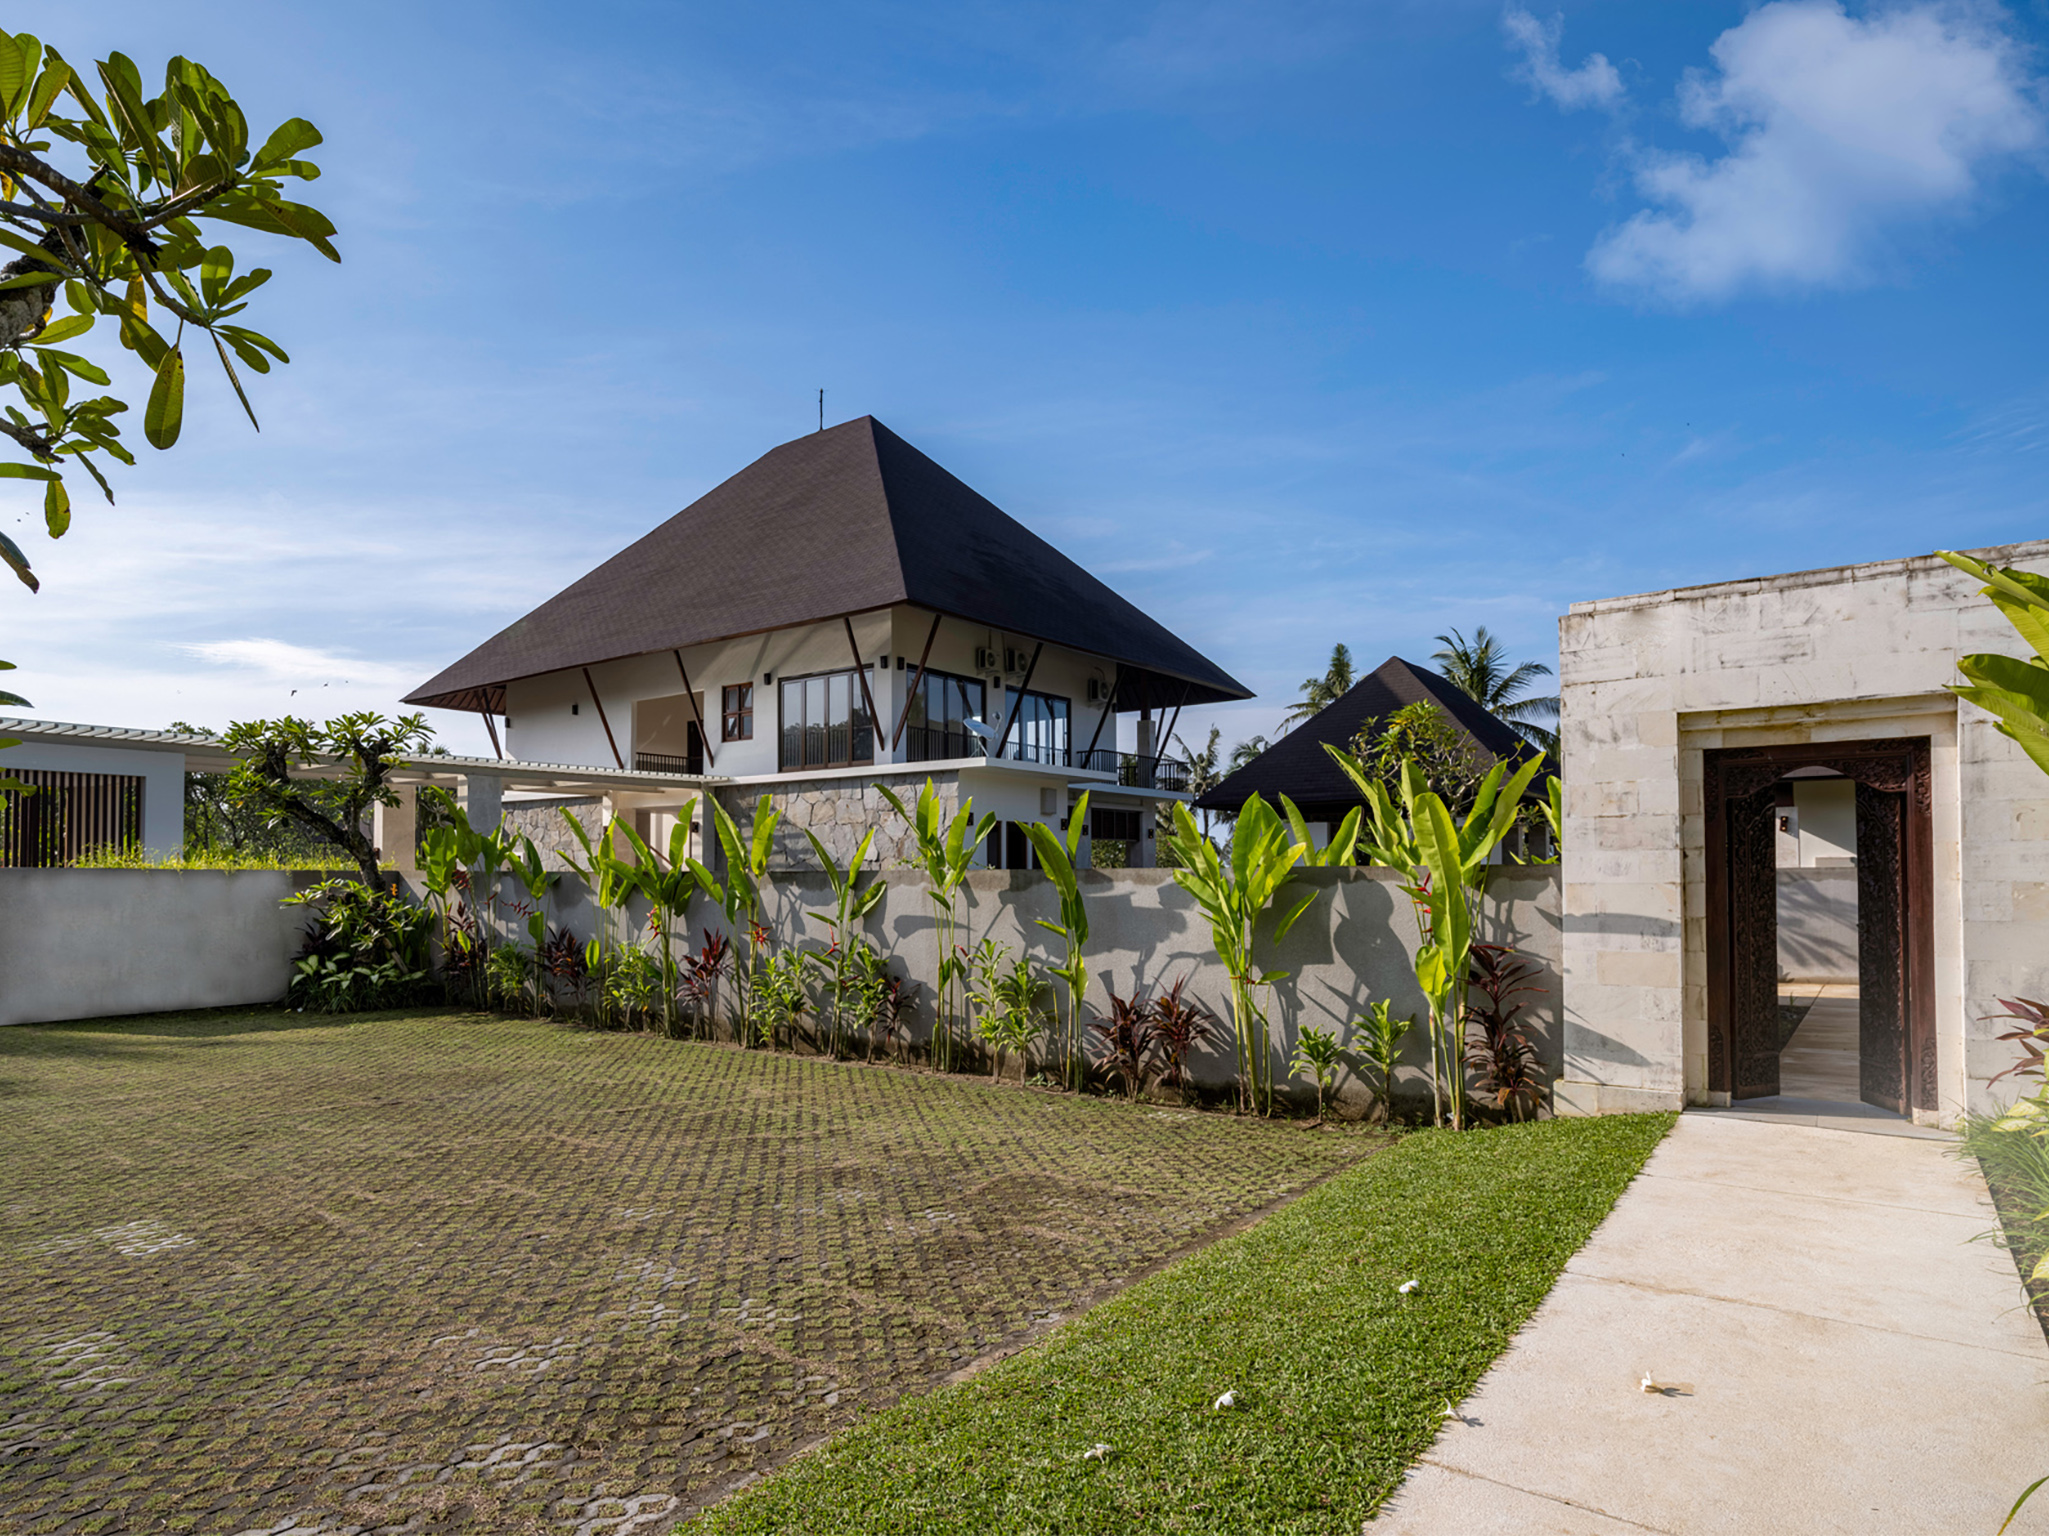 Villa Kailasha - Entrance to the villa - Villa Kailasha, Tabanan, Bali